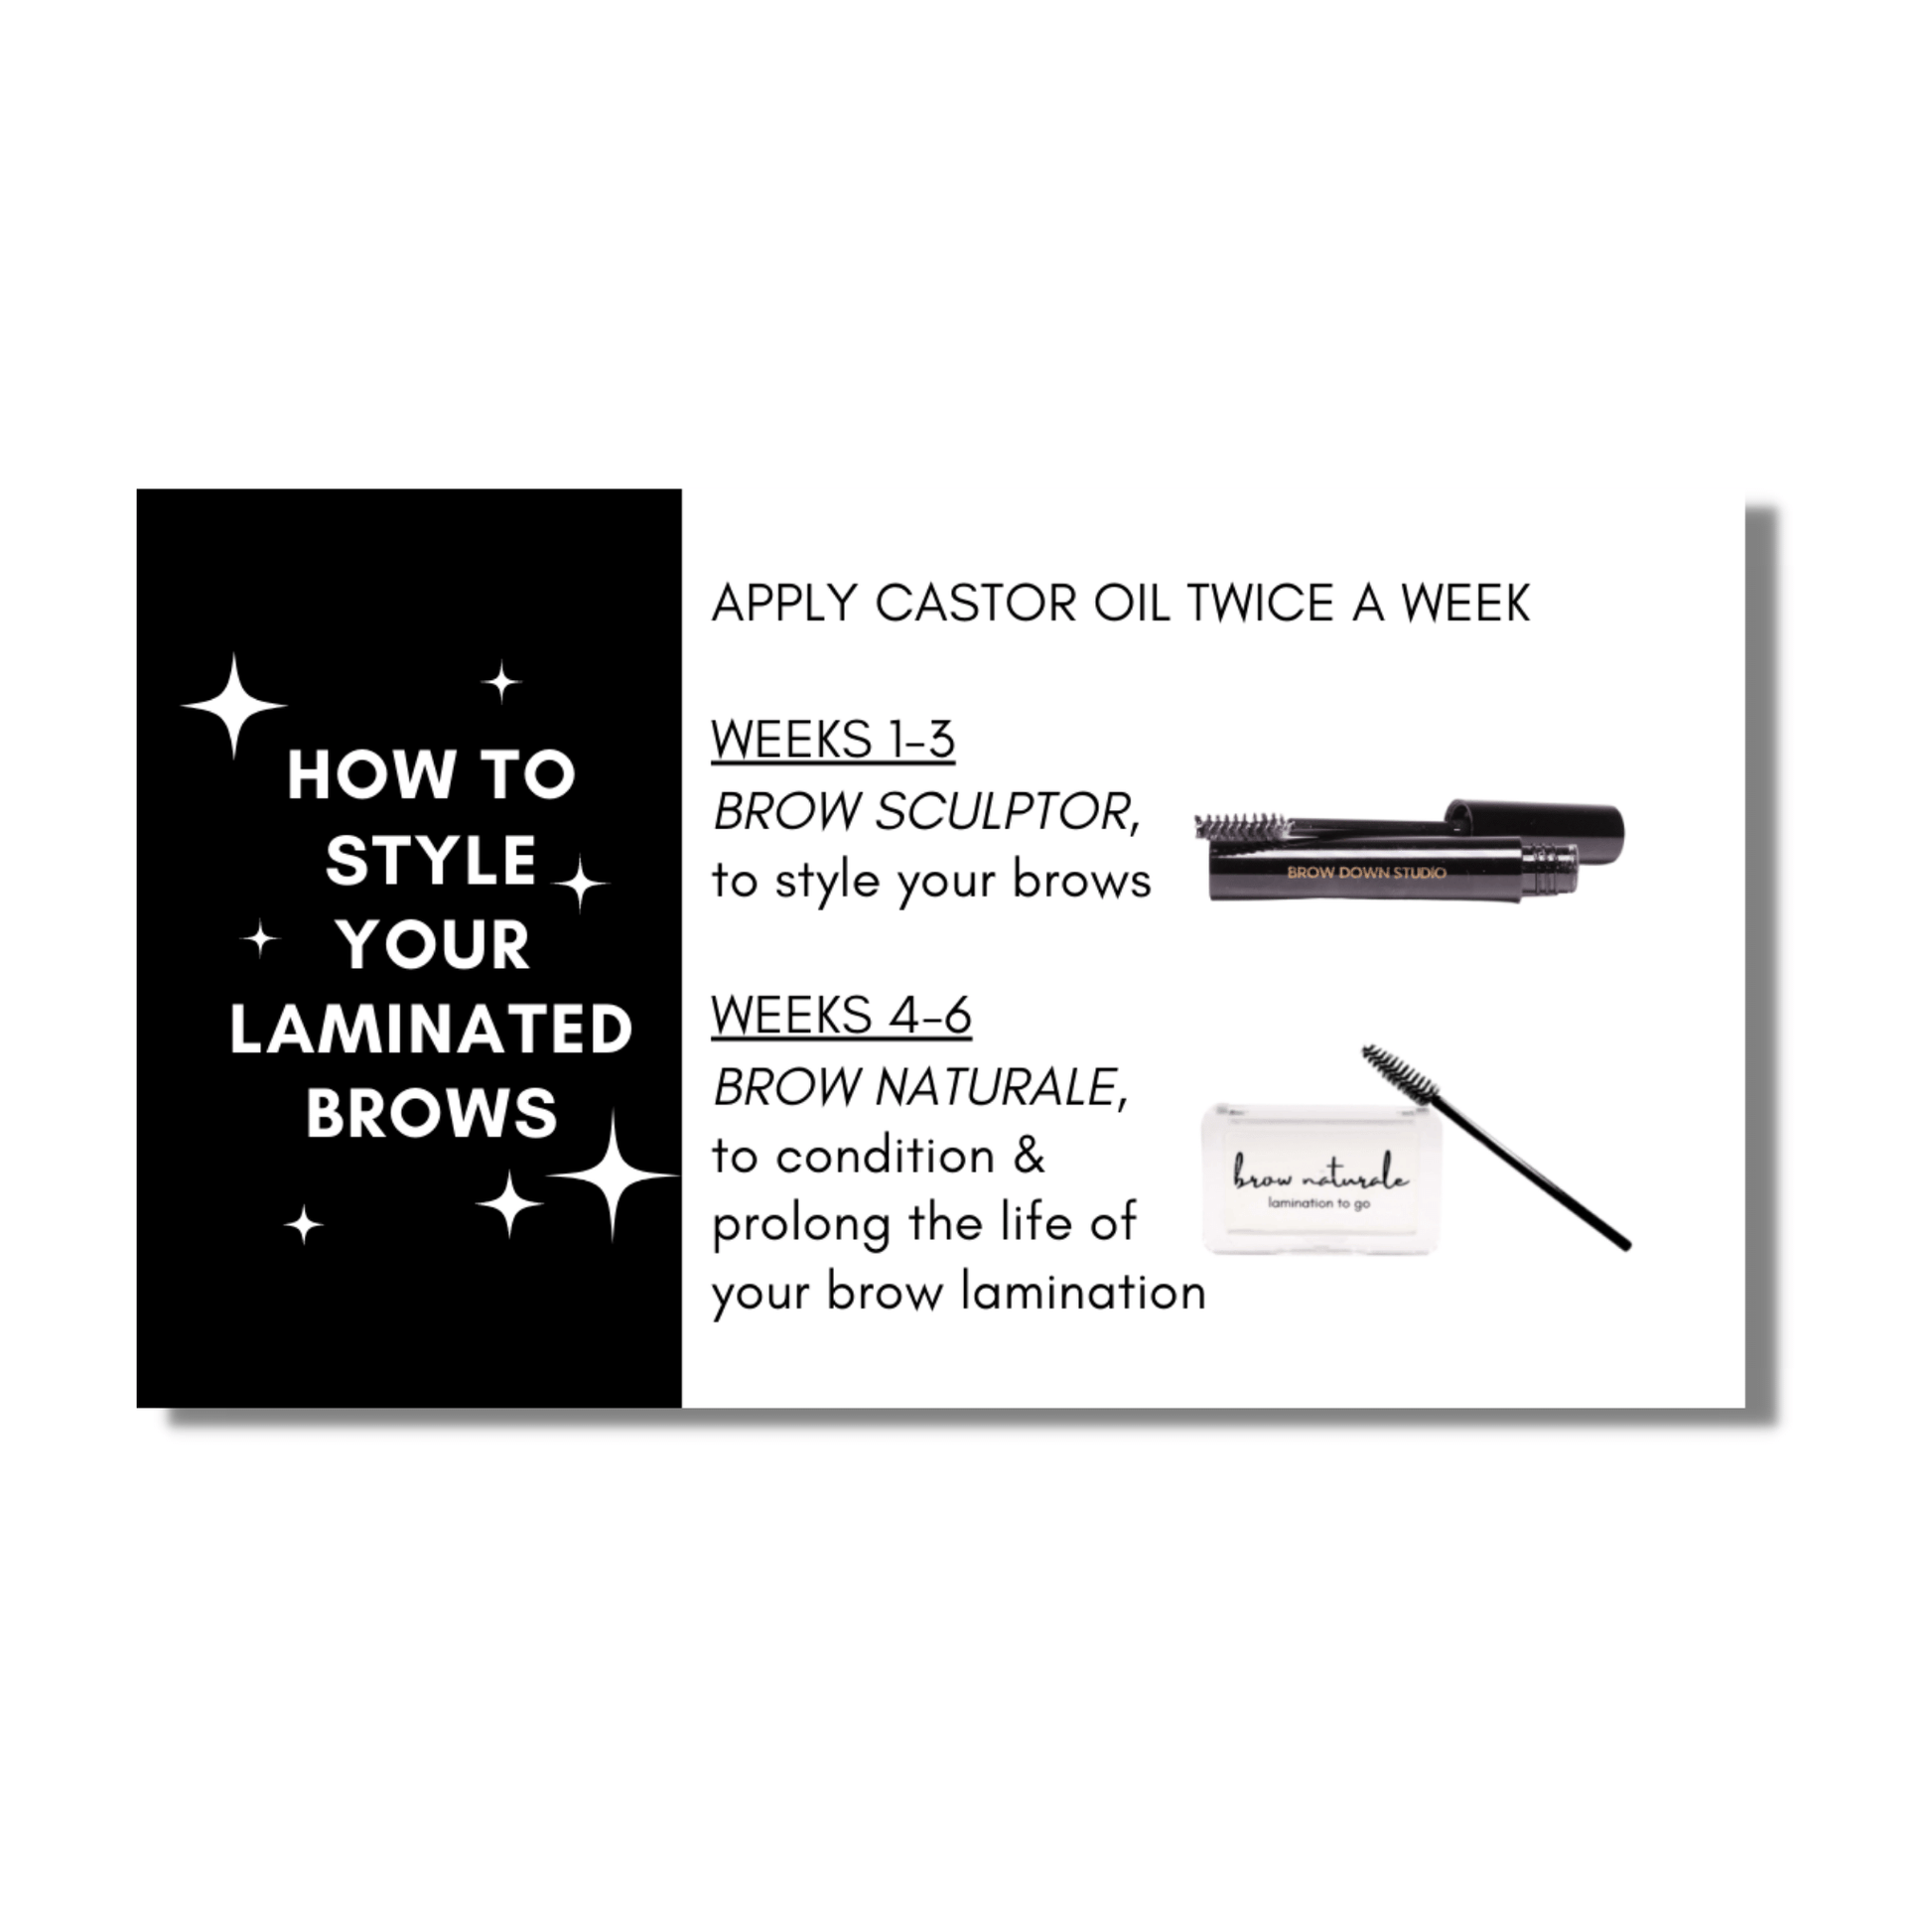 BAE (Brow Artist Essentials) Kit – BROW DOWN STUDIO PRO